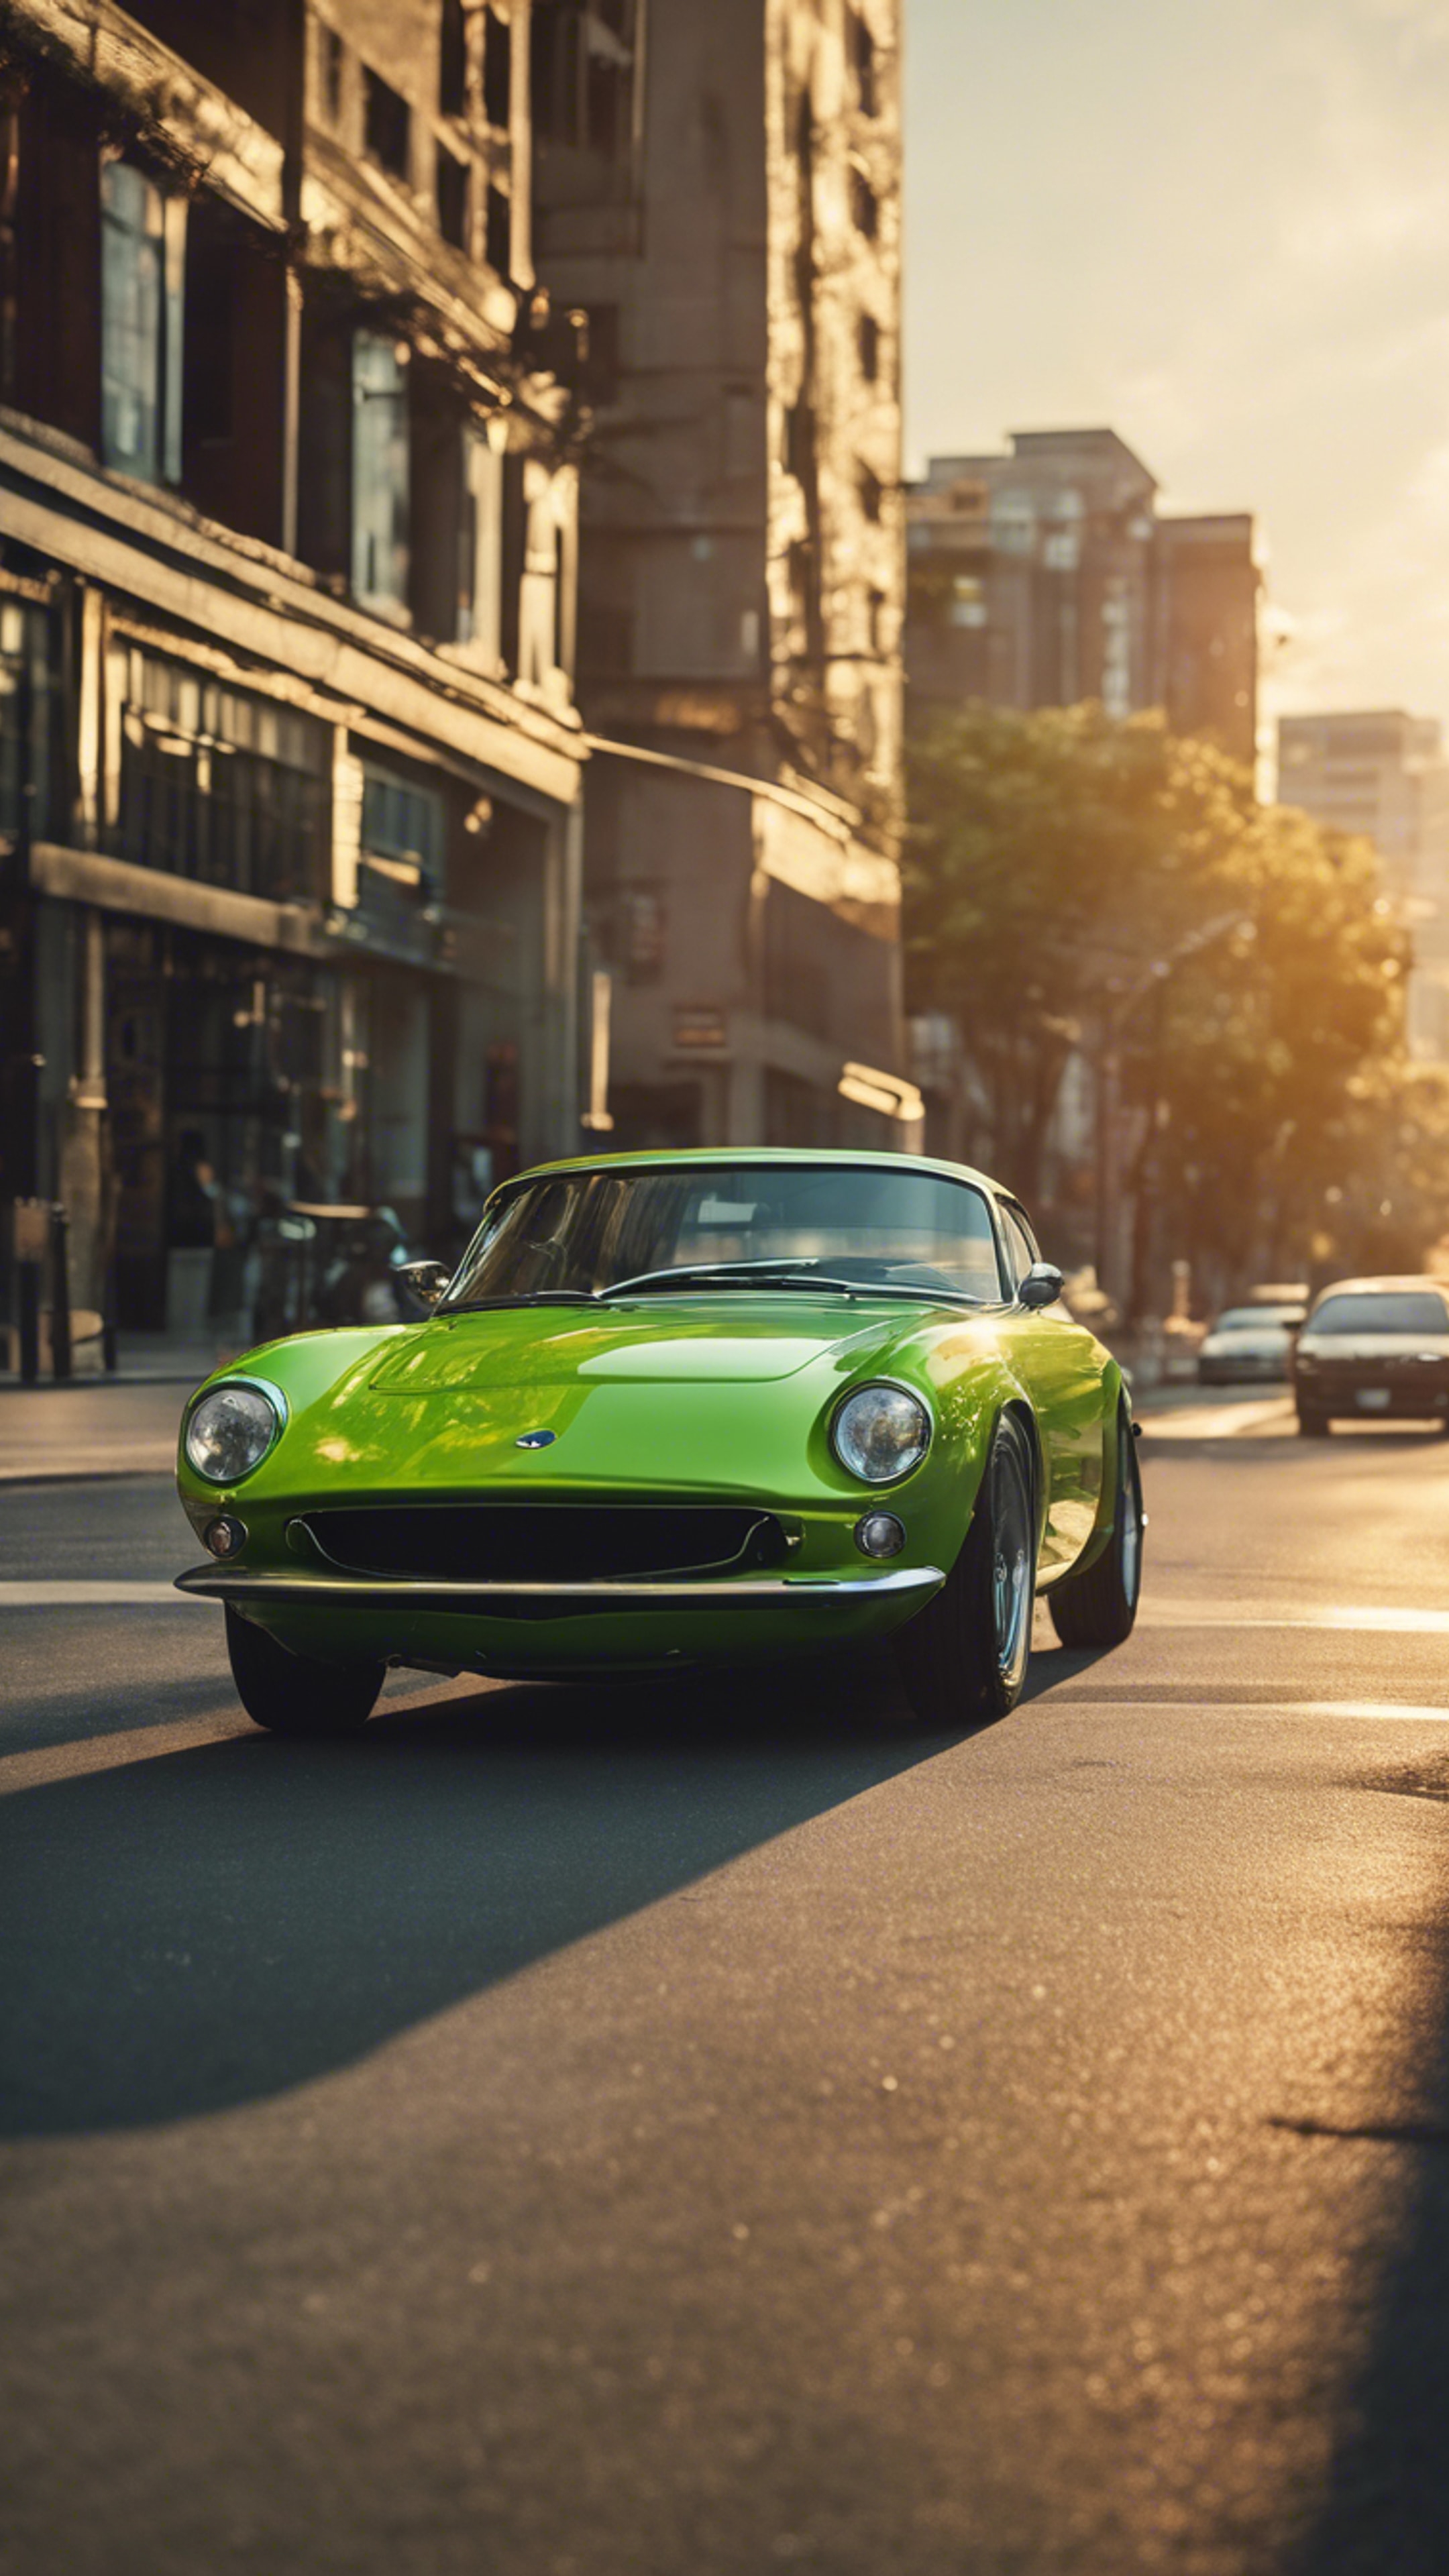 A lime green sports car speeding down a city street at sunset. Tapeta[650ecab6c10046e0a1d5]